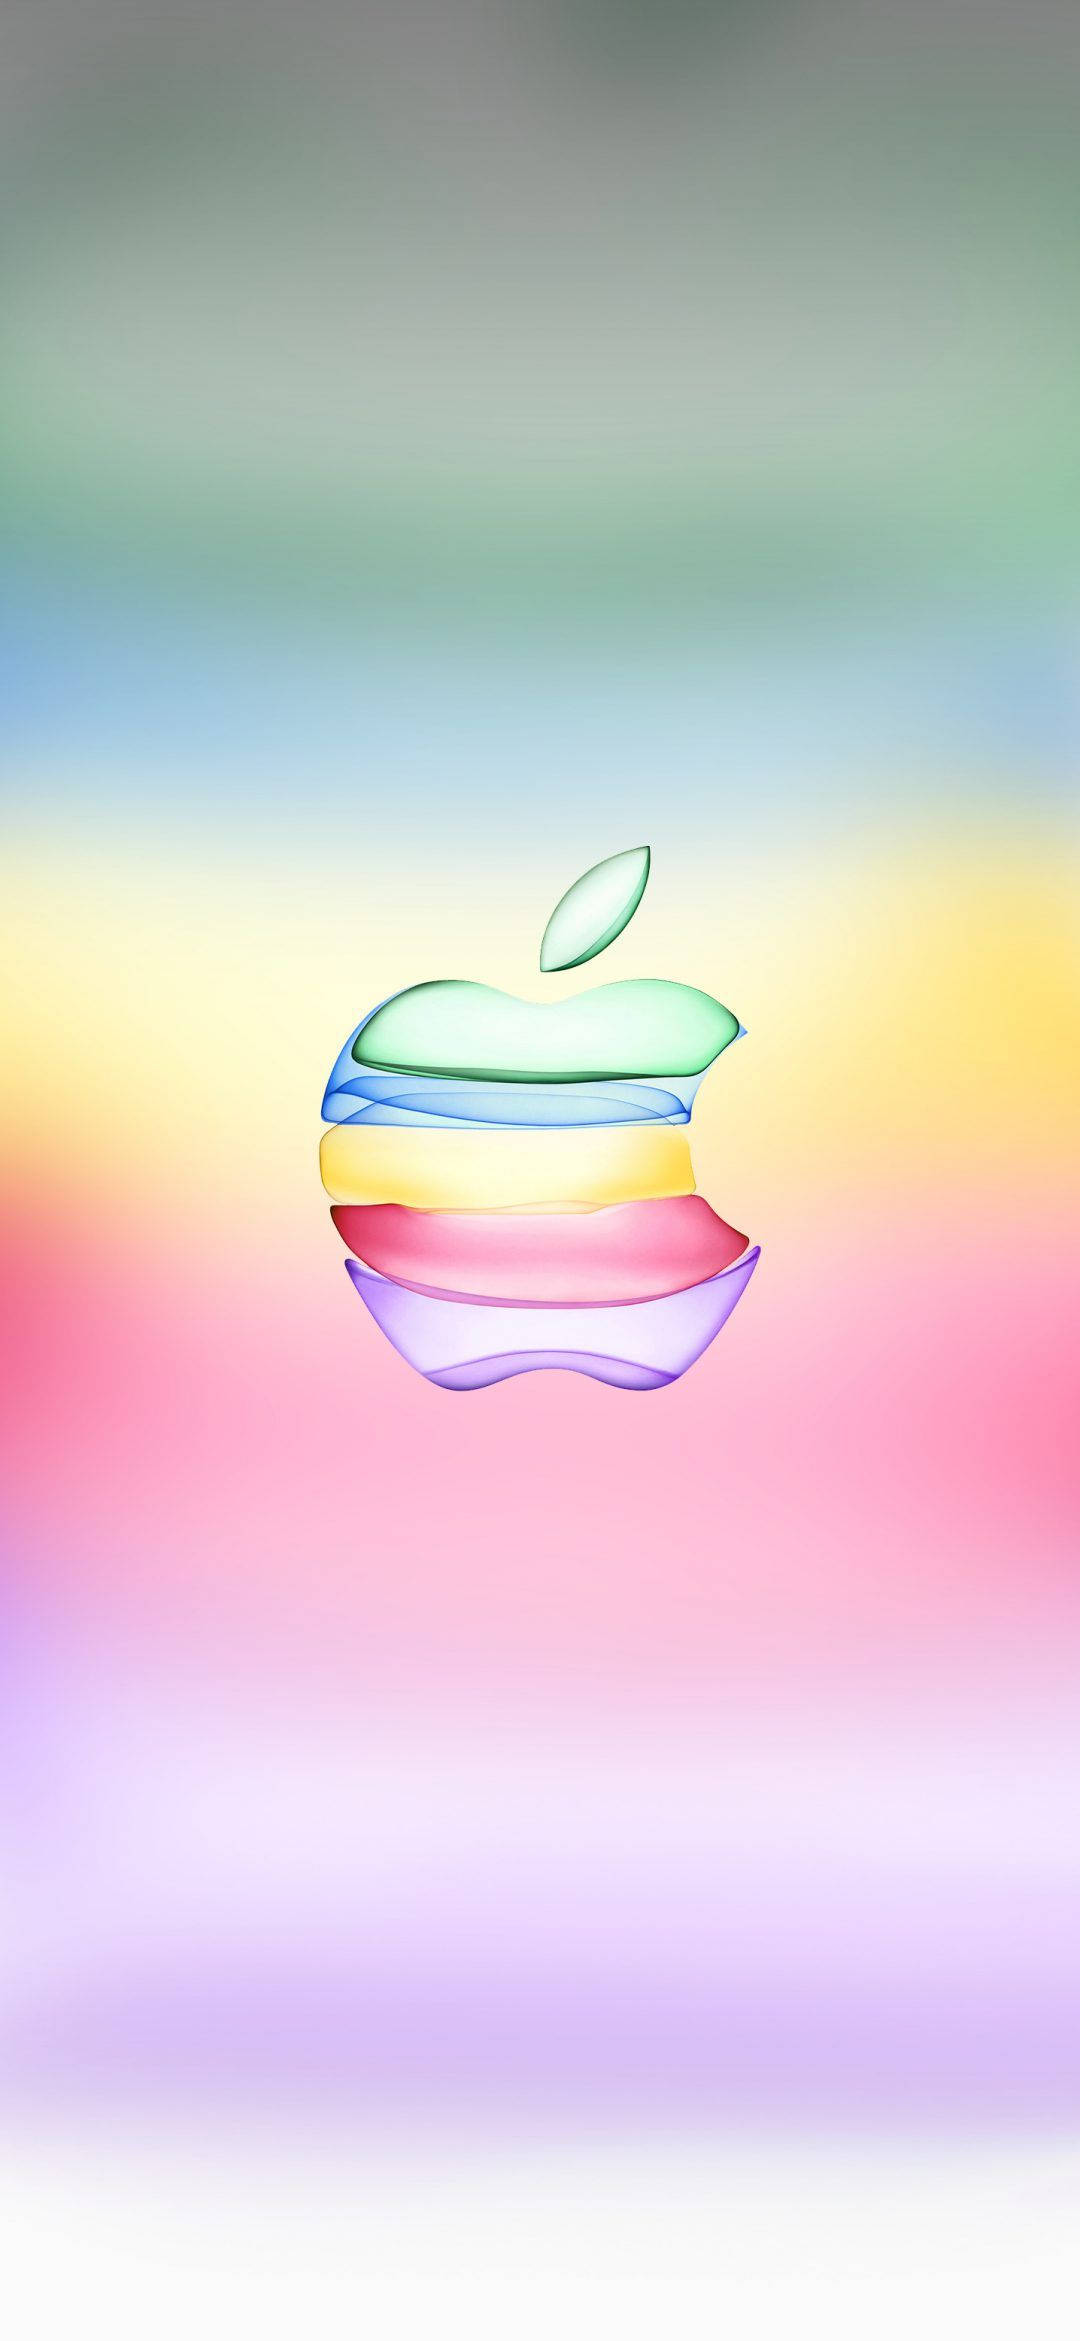 Download Apple Logo Iphone 11 Pro Max Wallpaper Wallpapers Com